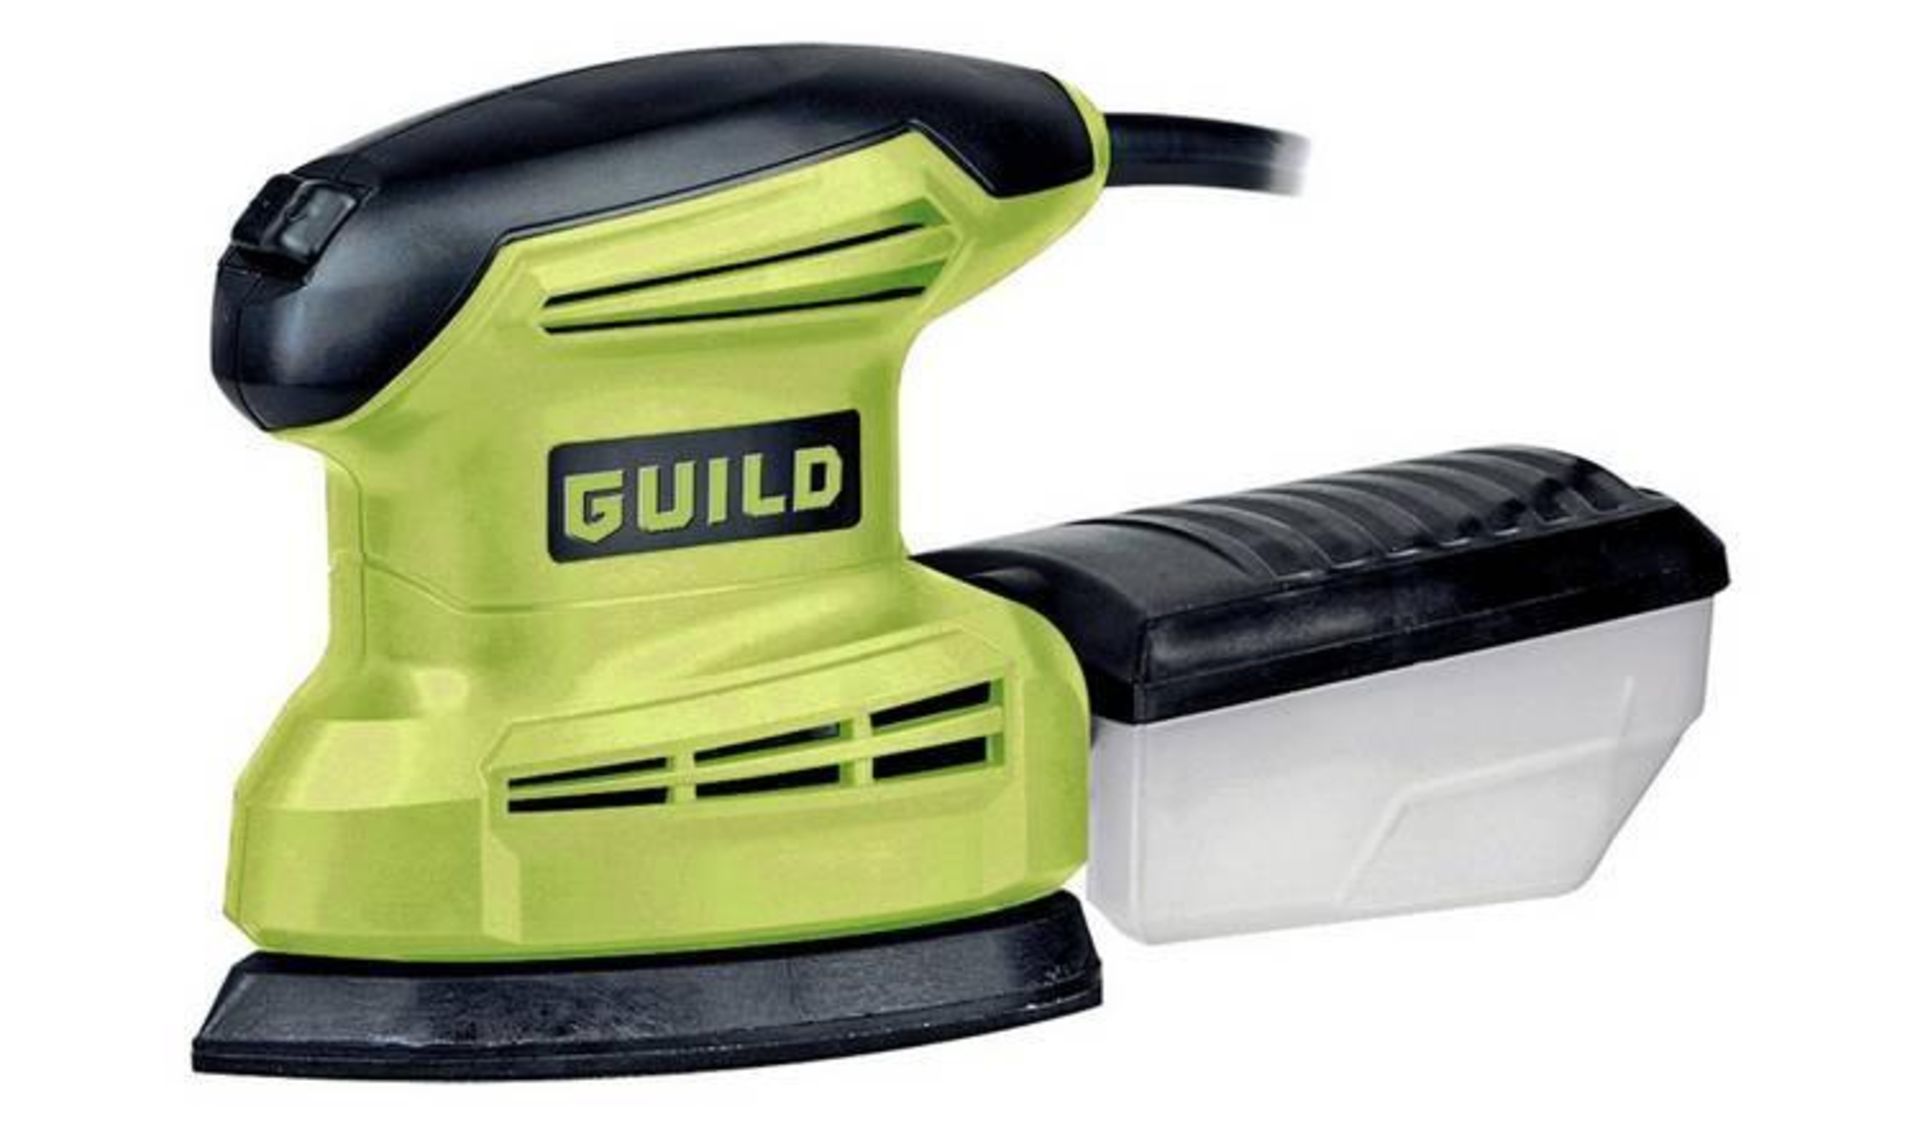 Guild Detail Sander - 135W 457/4886 £25.00 RRP